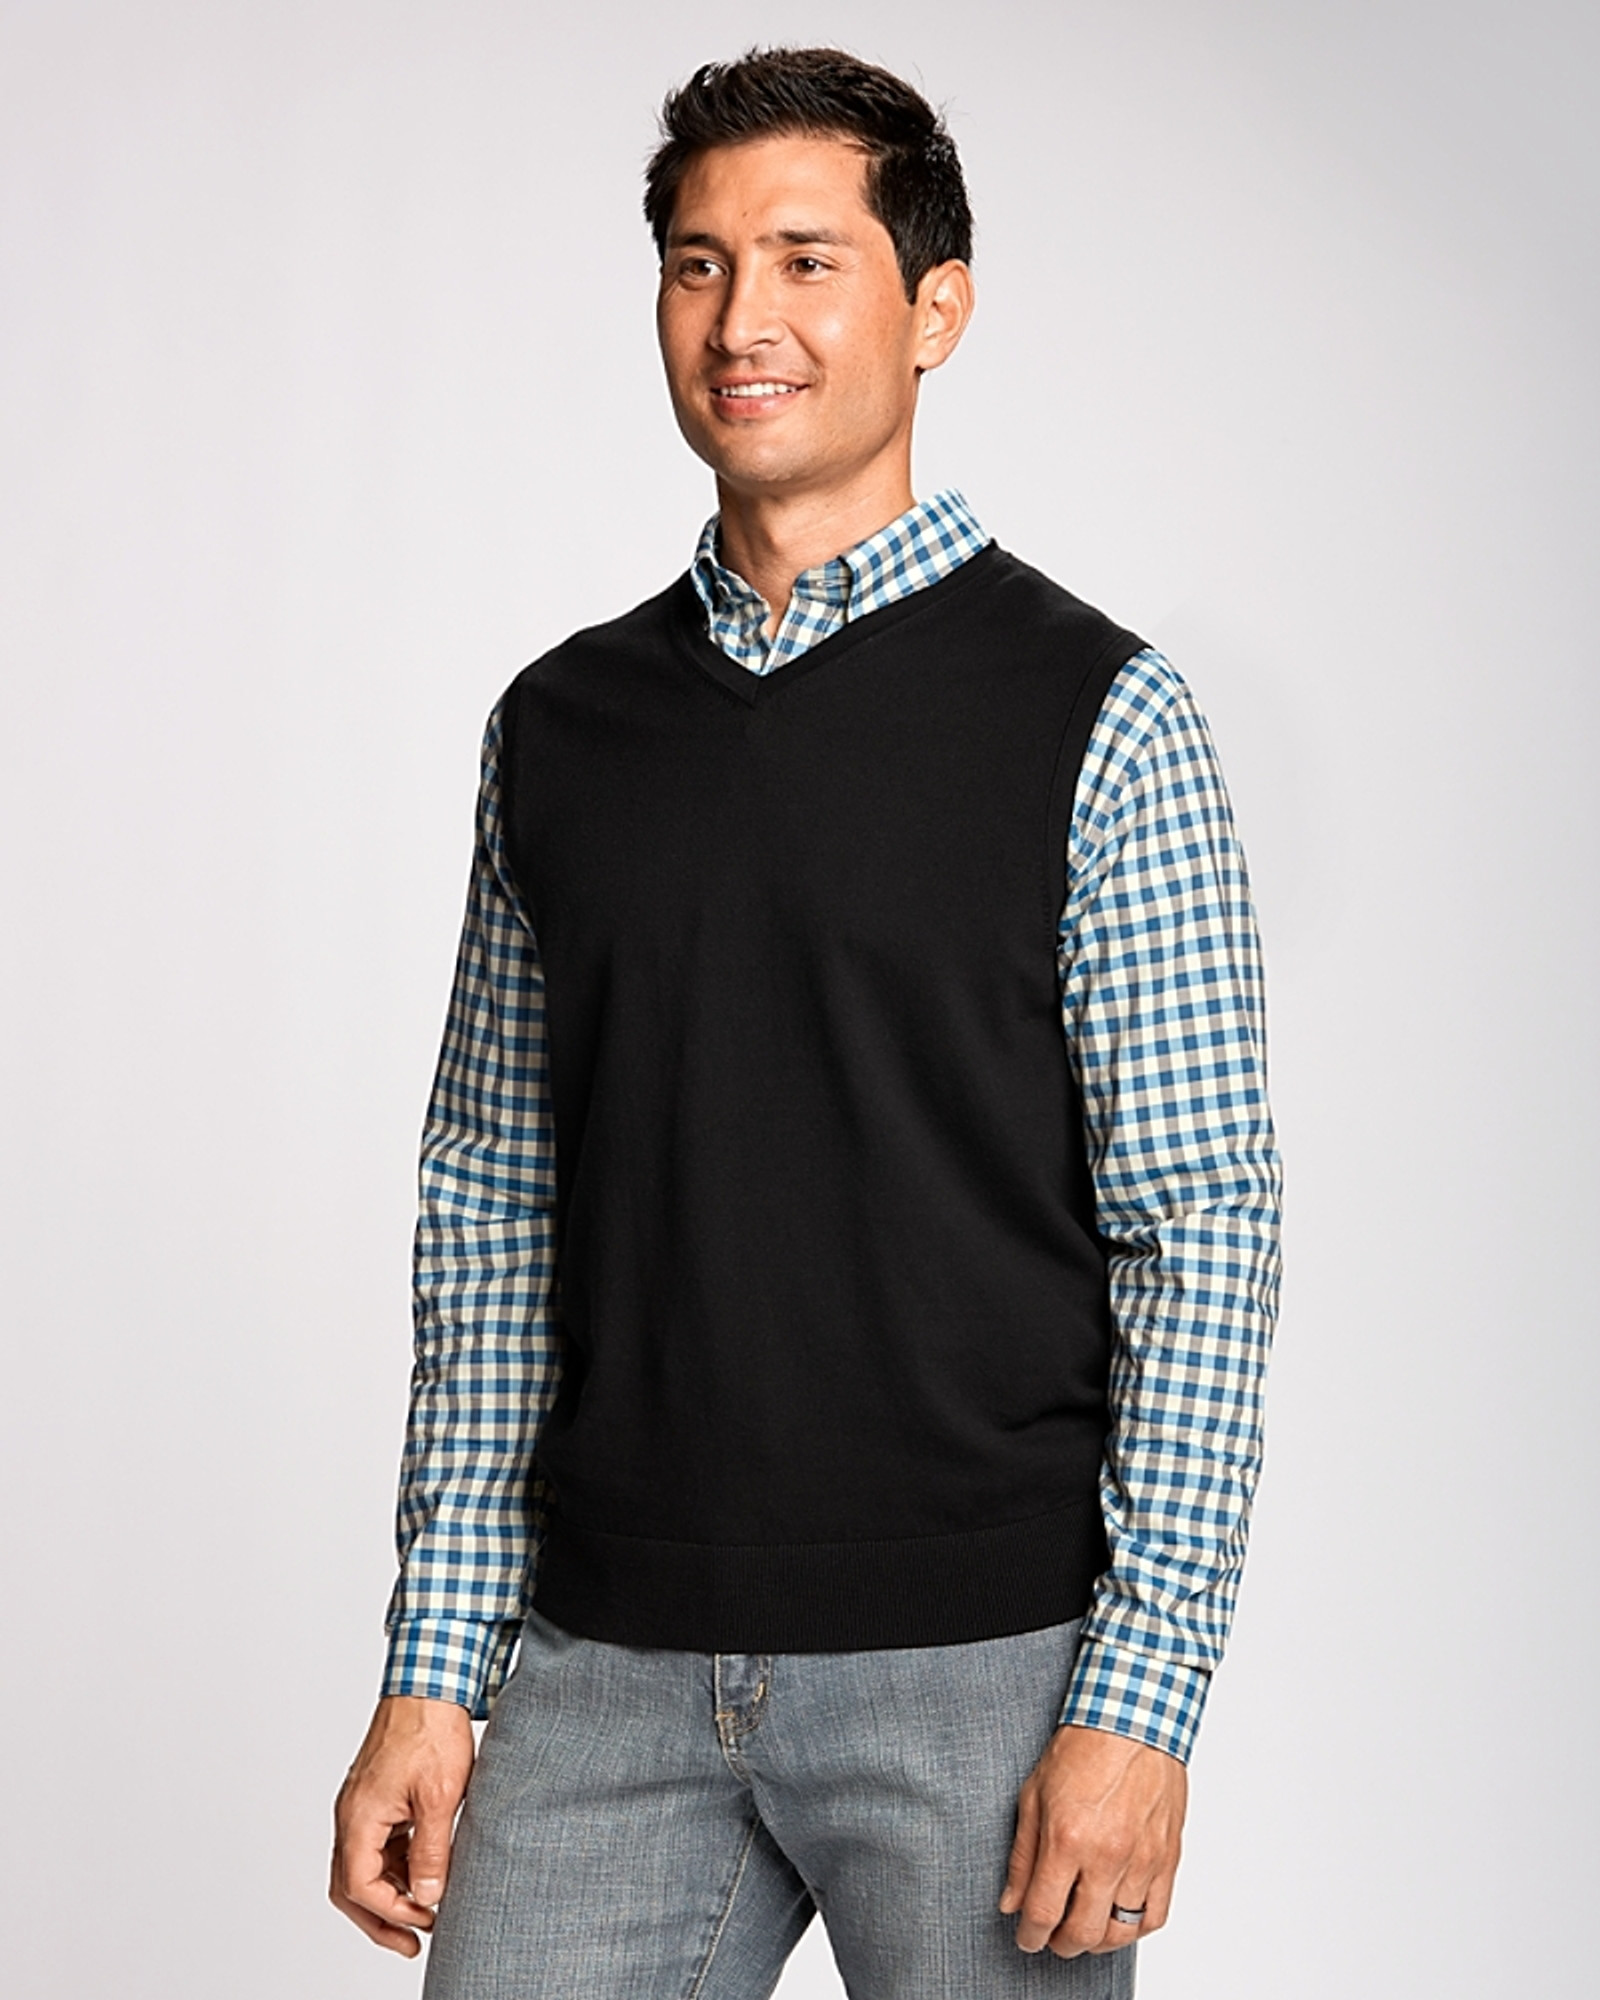 Lakemont Tri-Blend Big & Tall V-Neck Sweater Vest